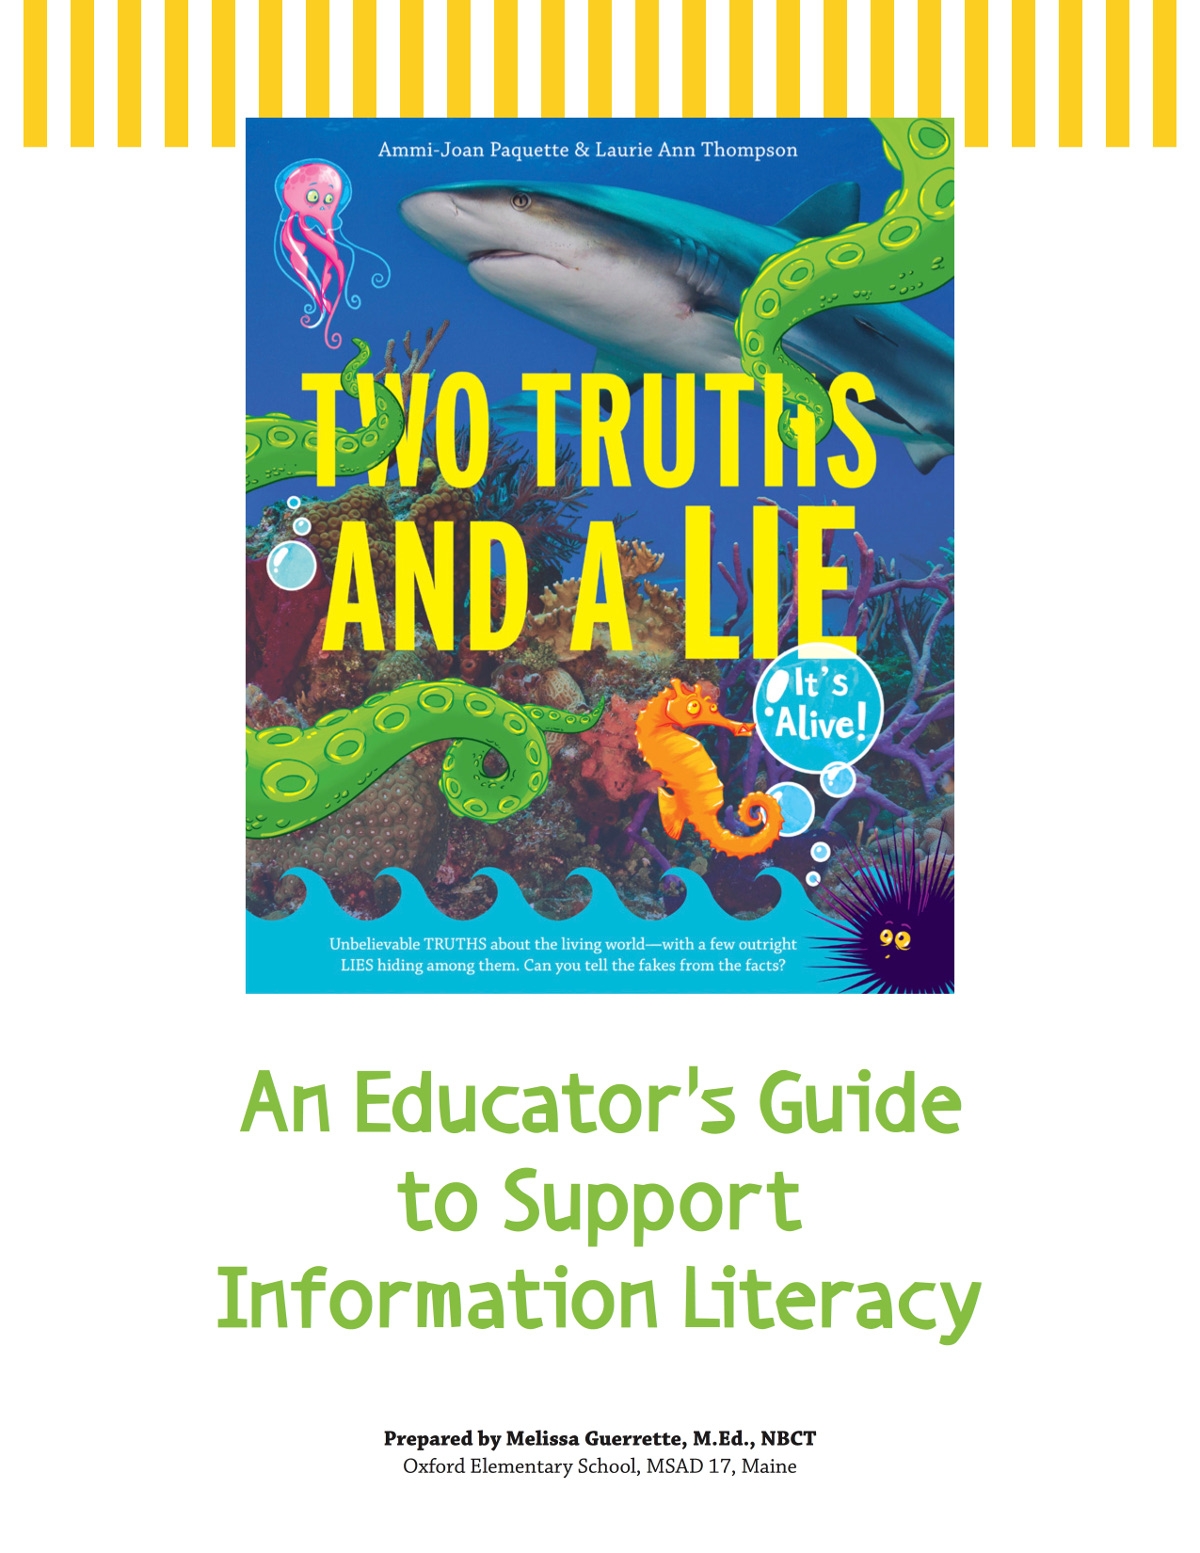 Educator's Guide cover